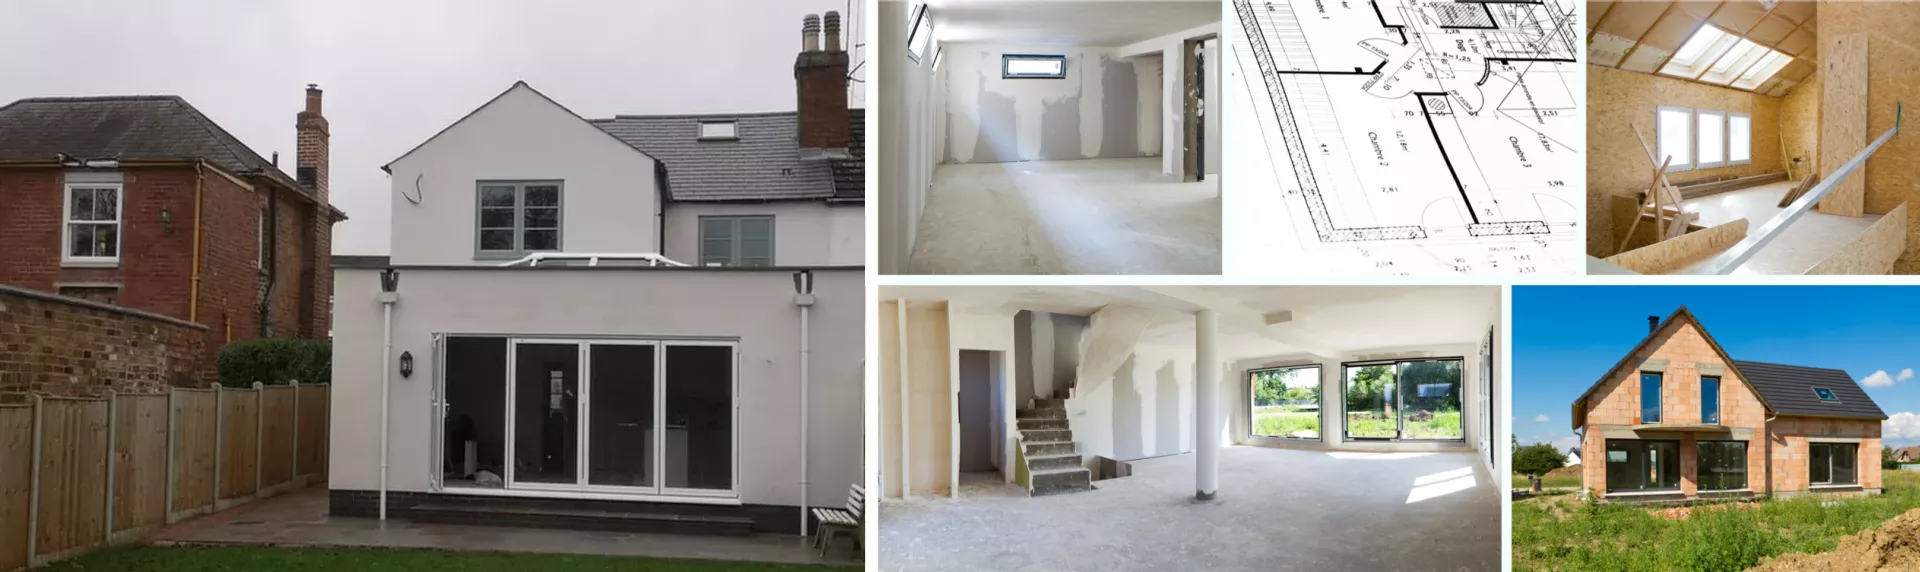 prestige-loft-conversions-woolaston-house-renovation-gallery-banner